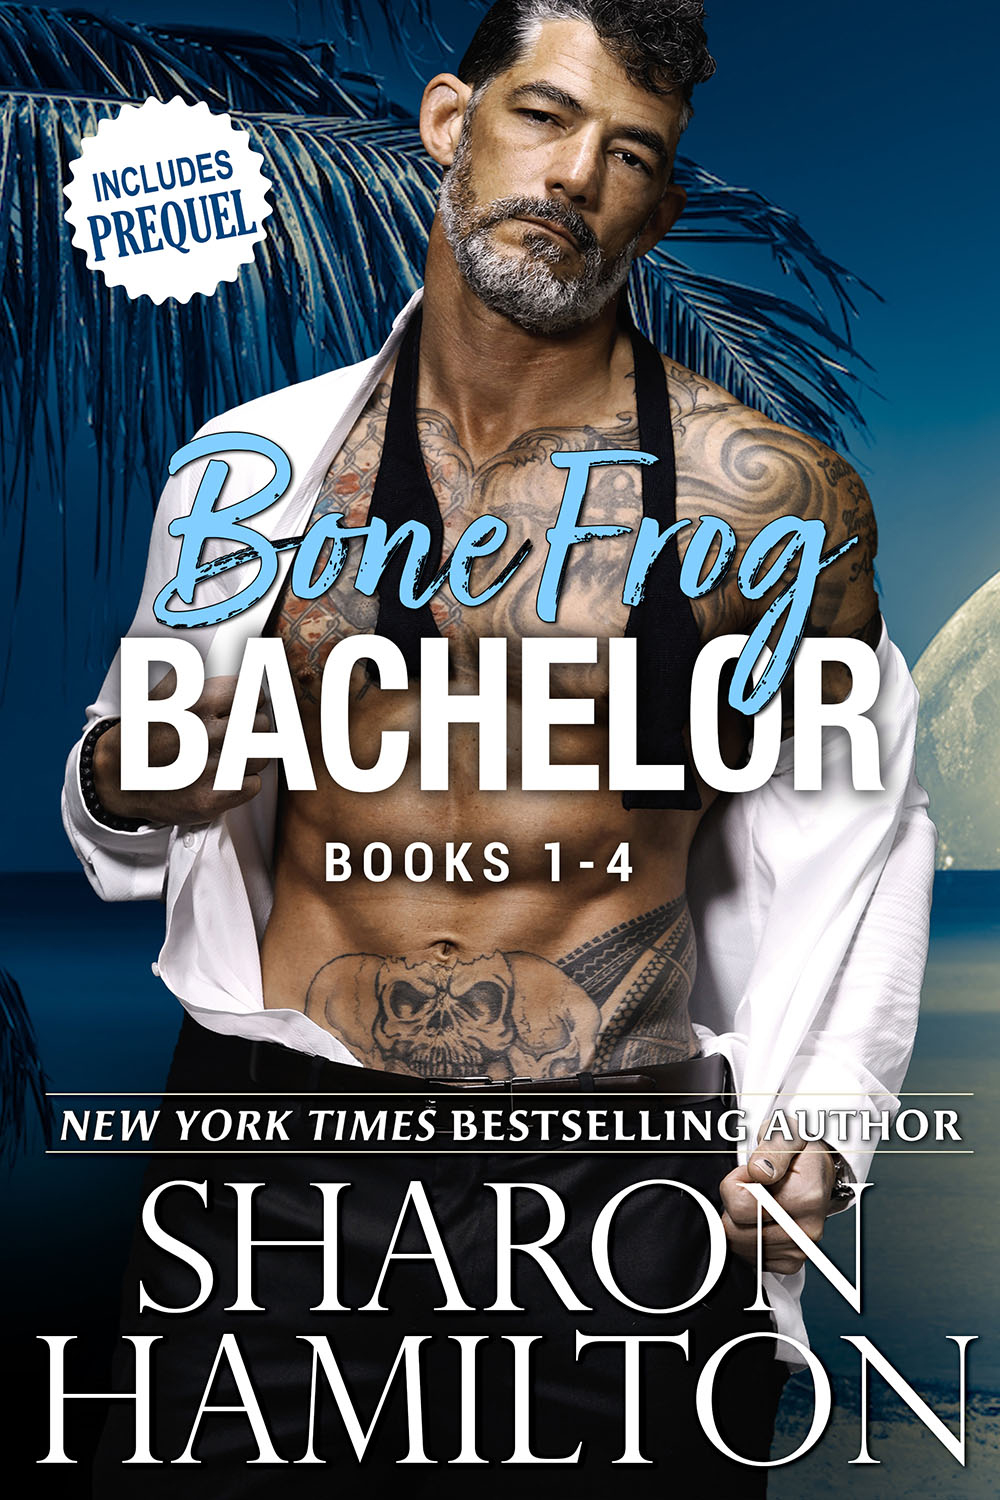 bone frog bachelor series book bundle cover